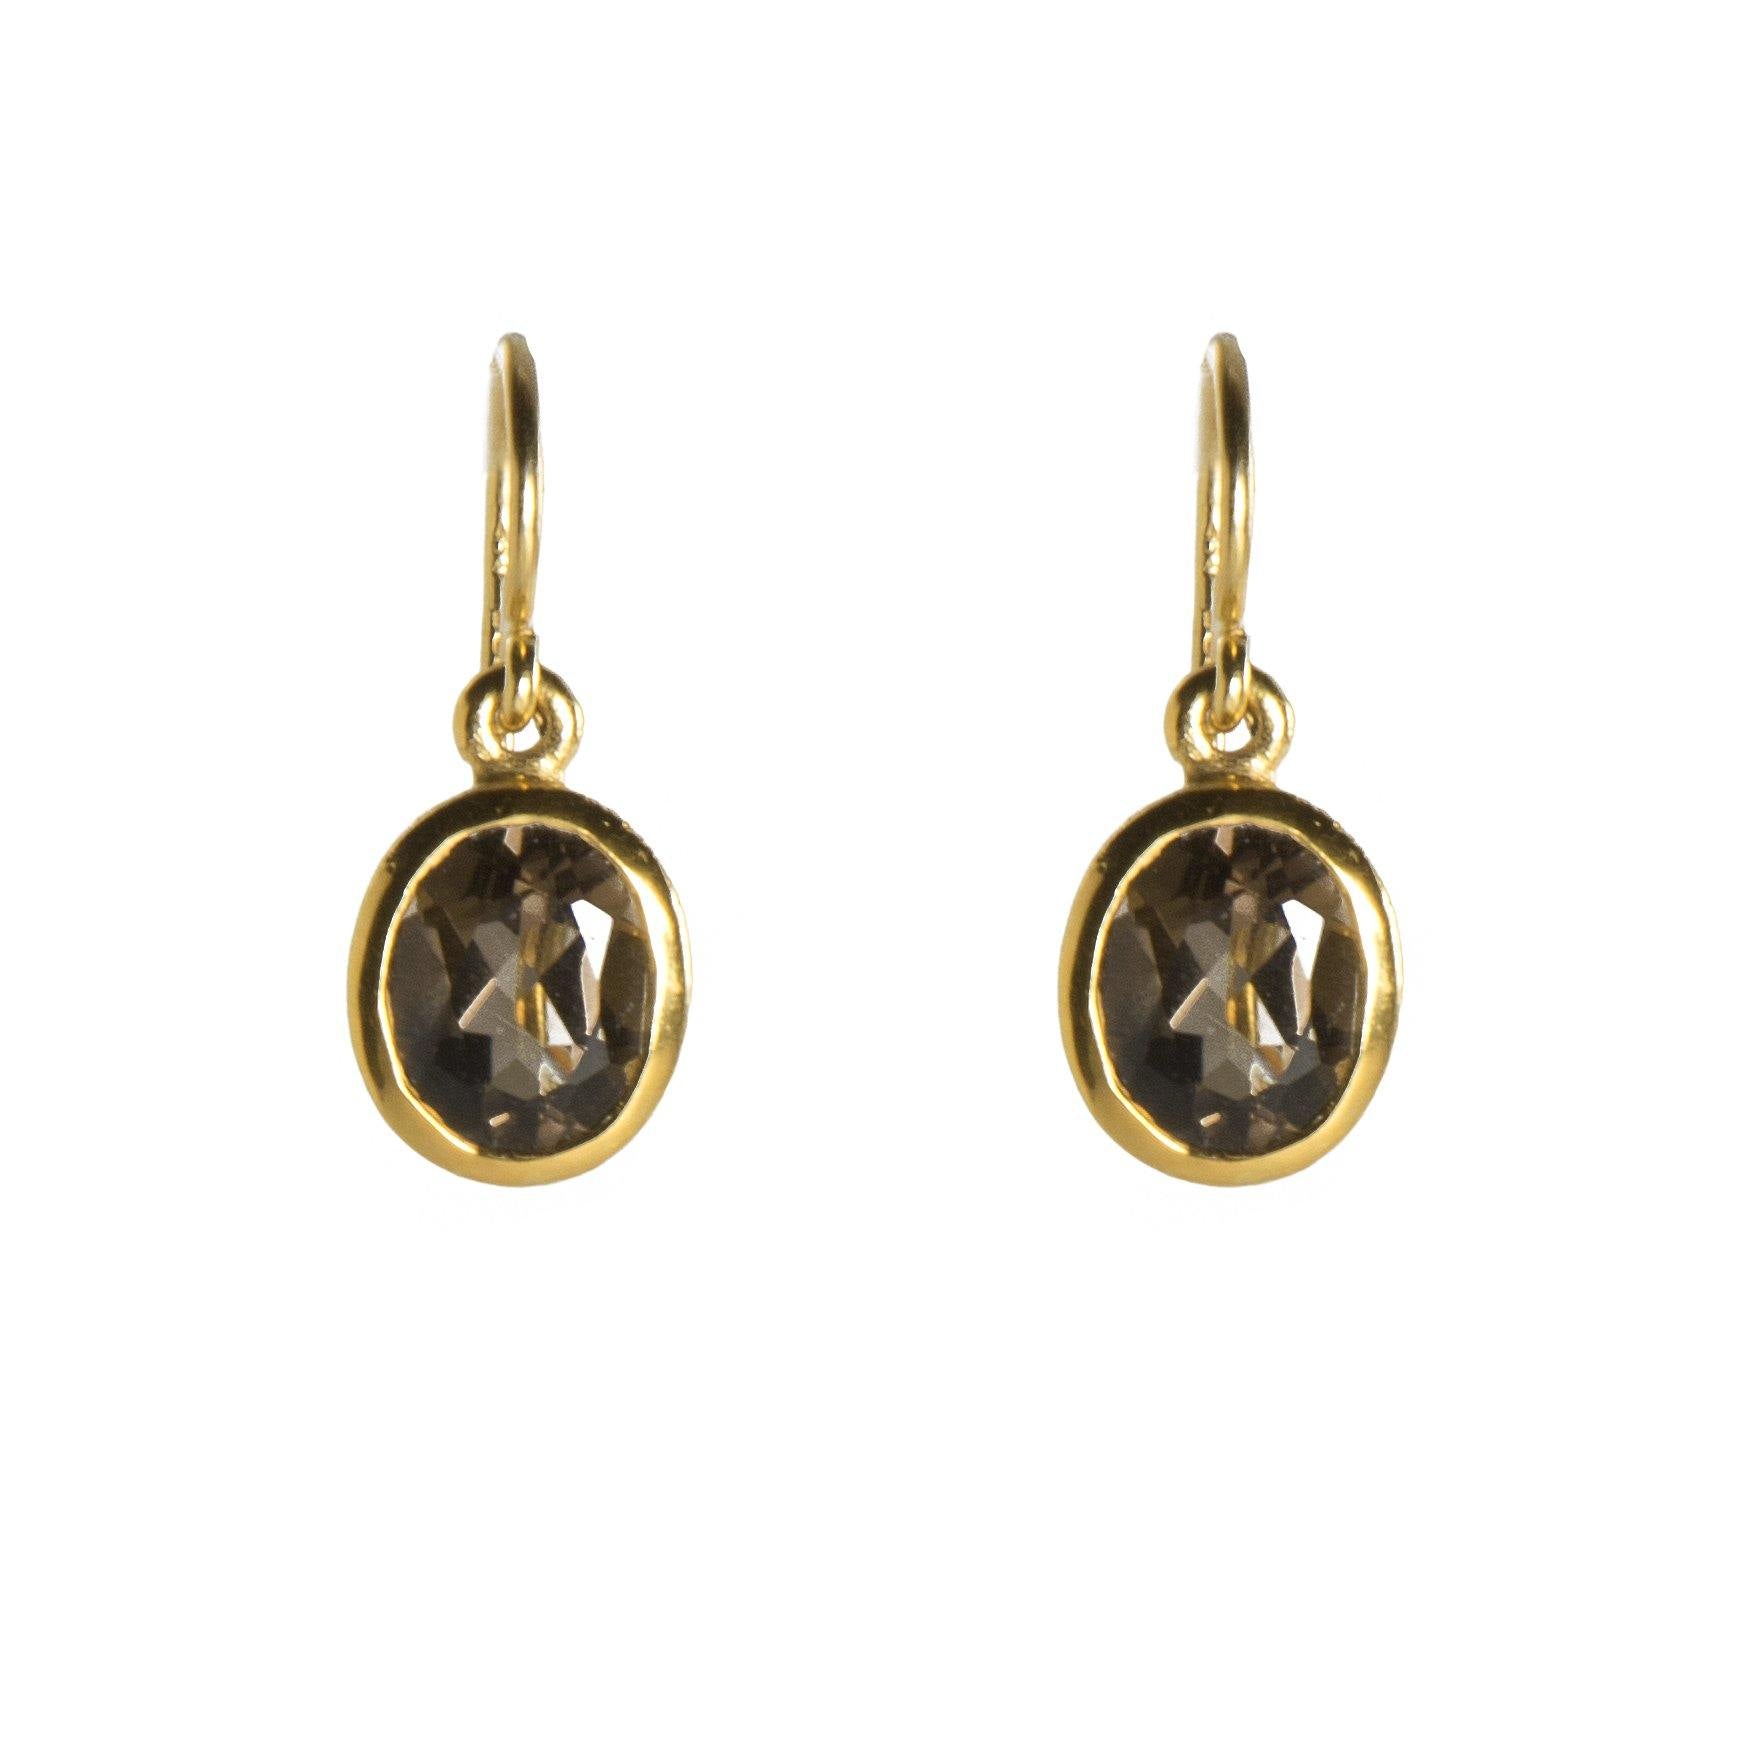 SMOKY QUARTZ EARRINGS FAIR TRADE 24K GOLD VERMEIL - Joyla Jewelry